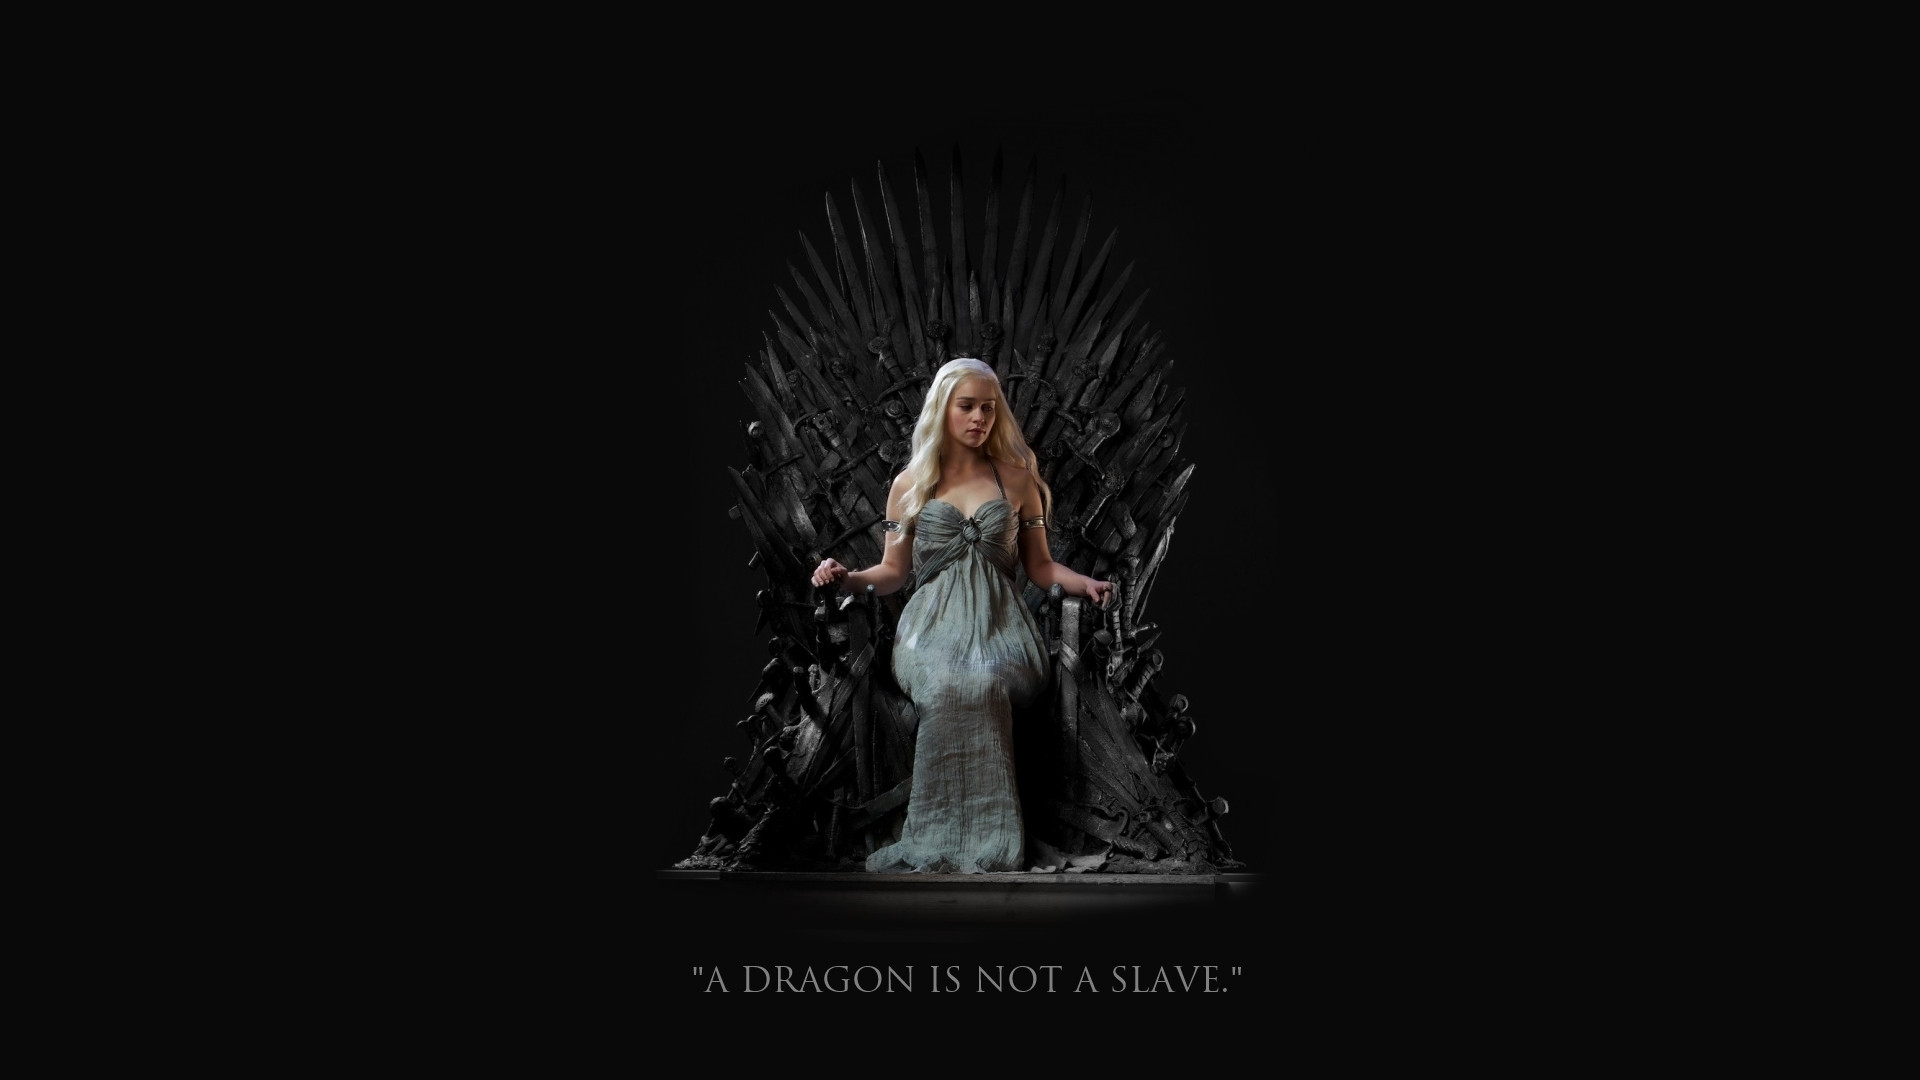 Daenerys sitting on the Iron Throne